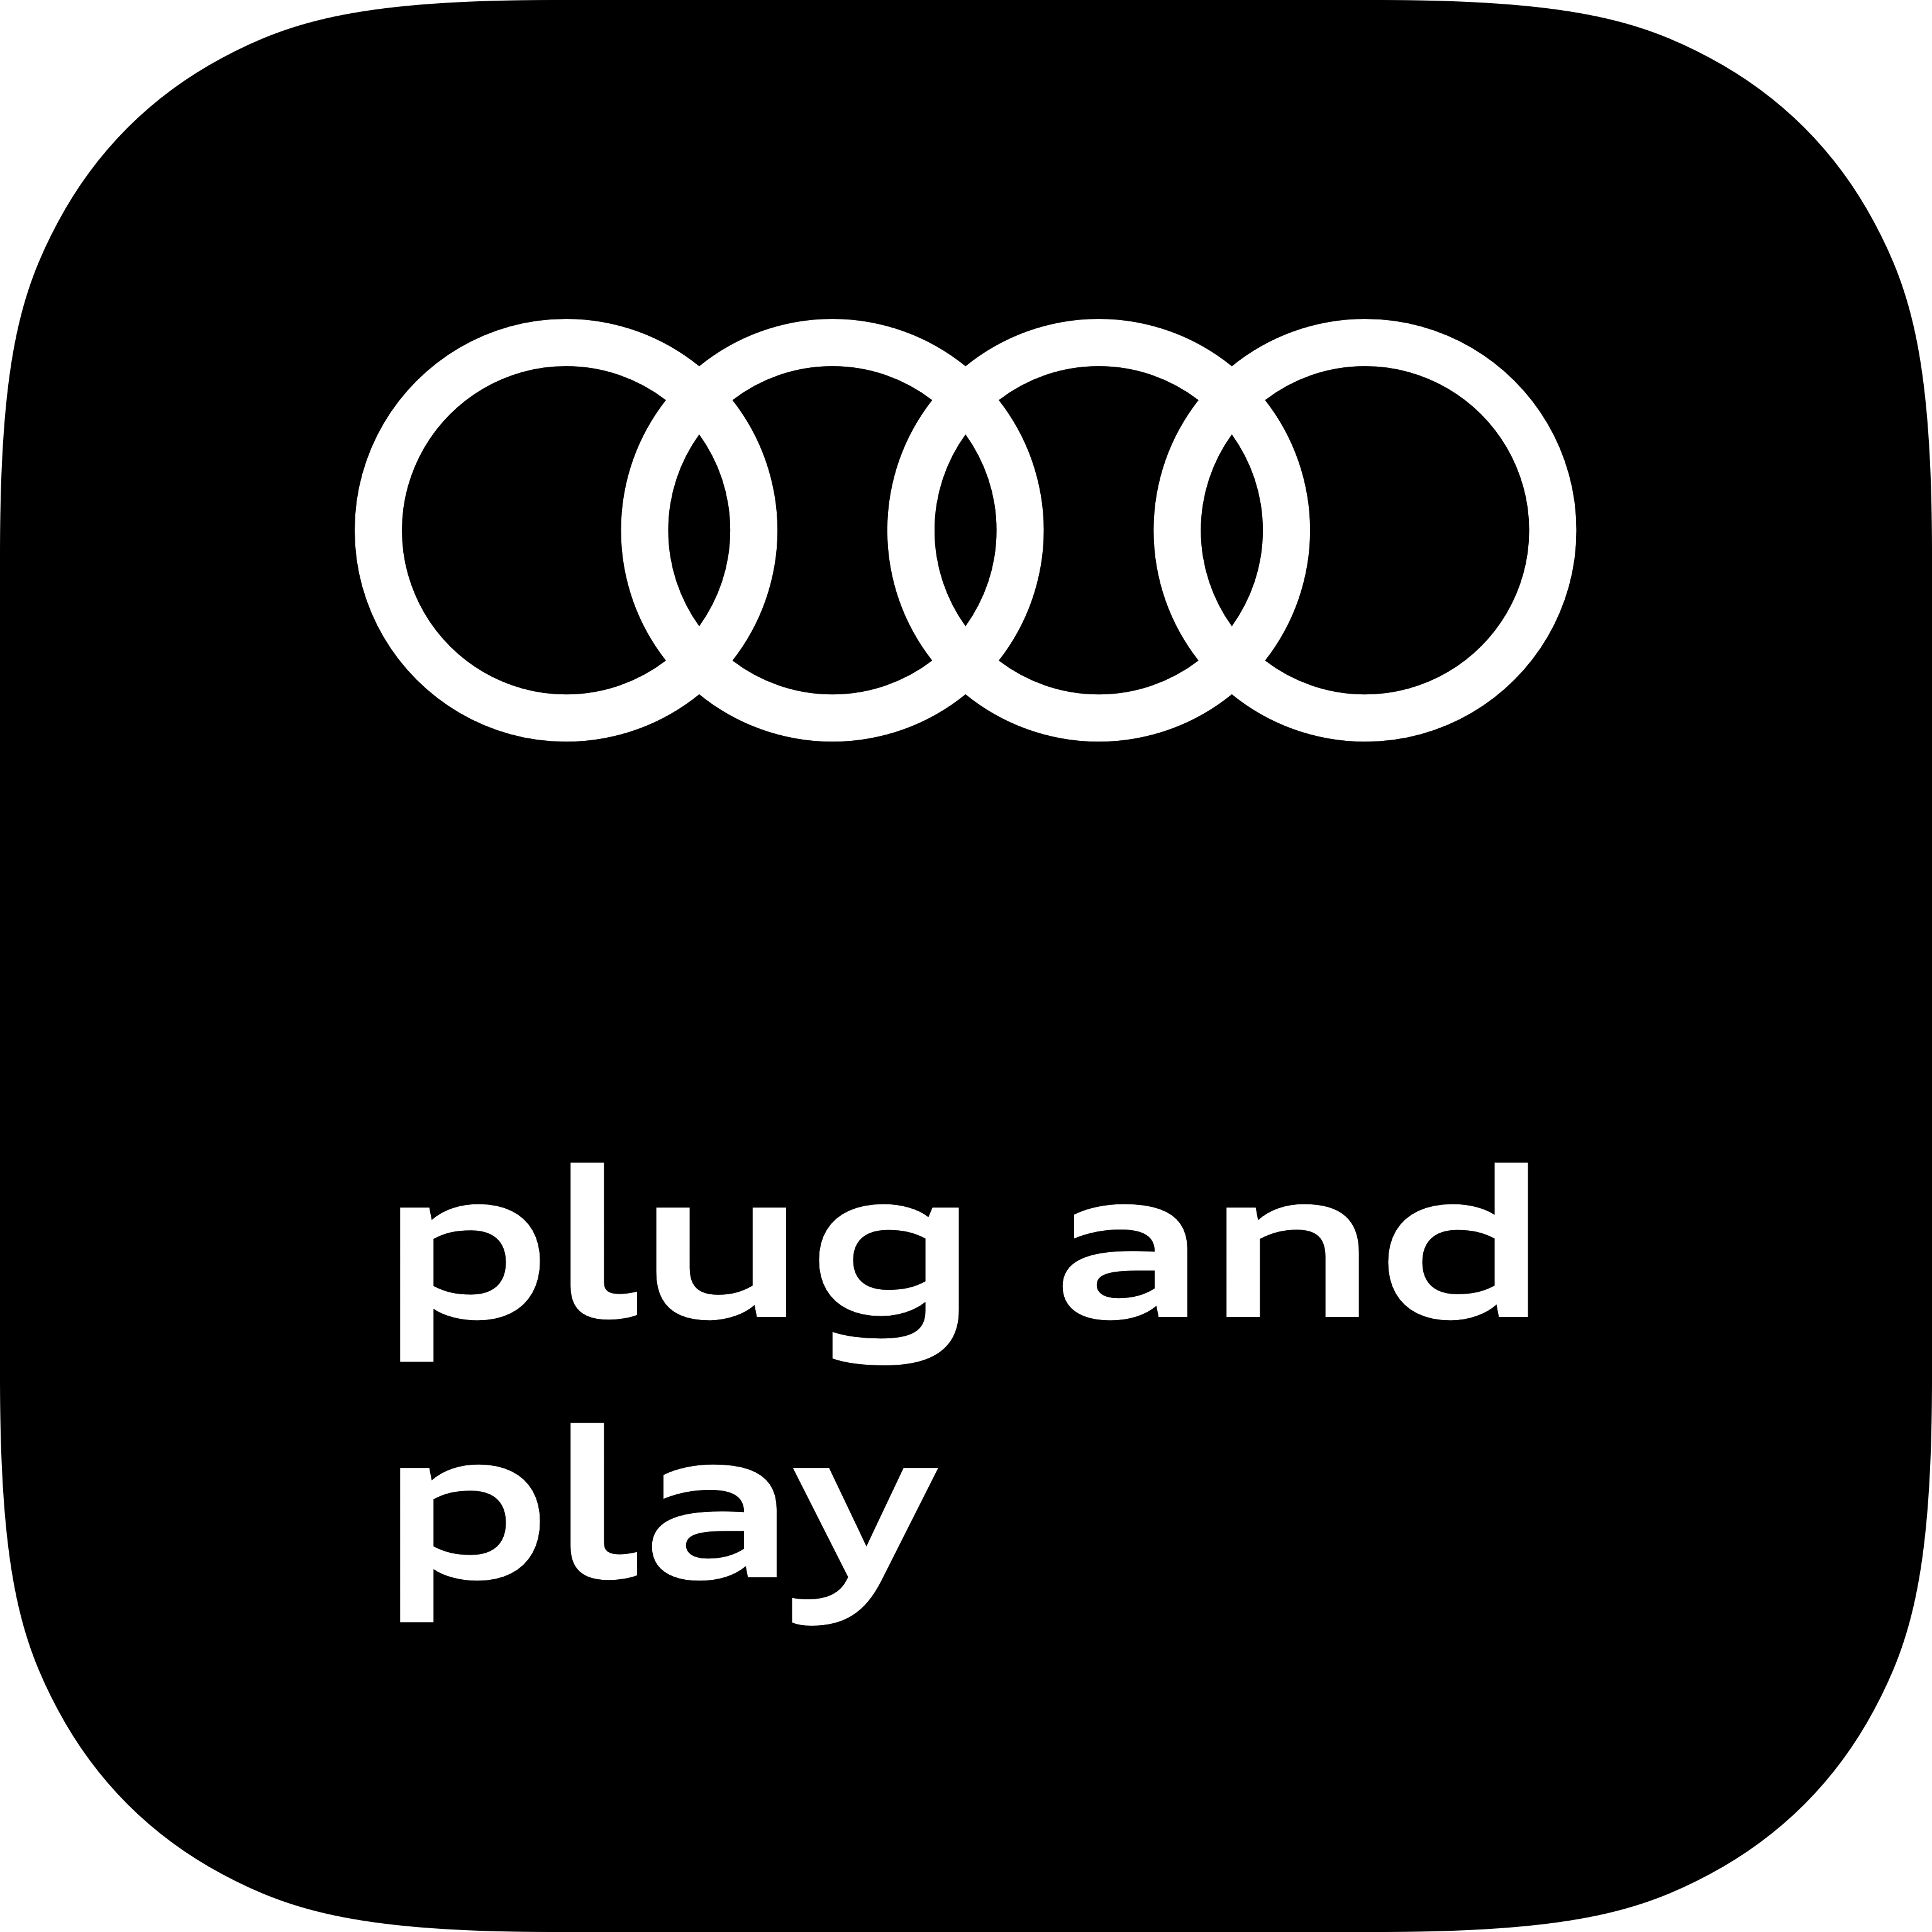 Audi connect plug and play